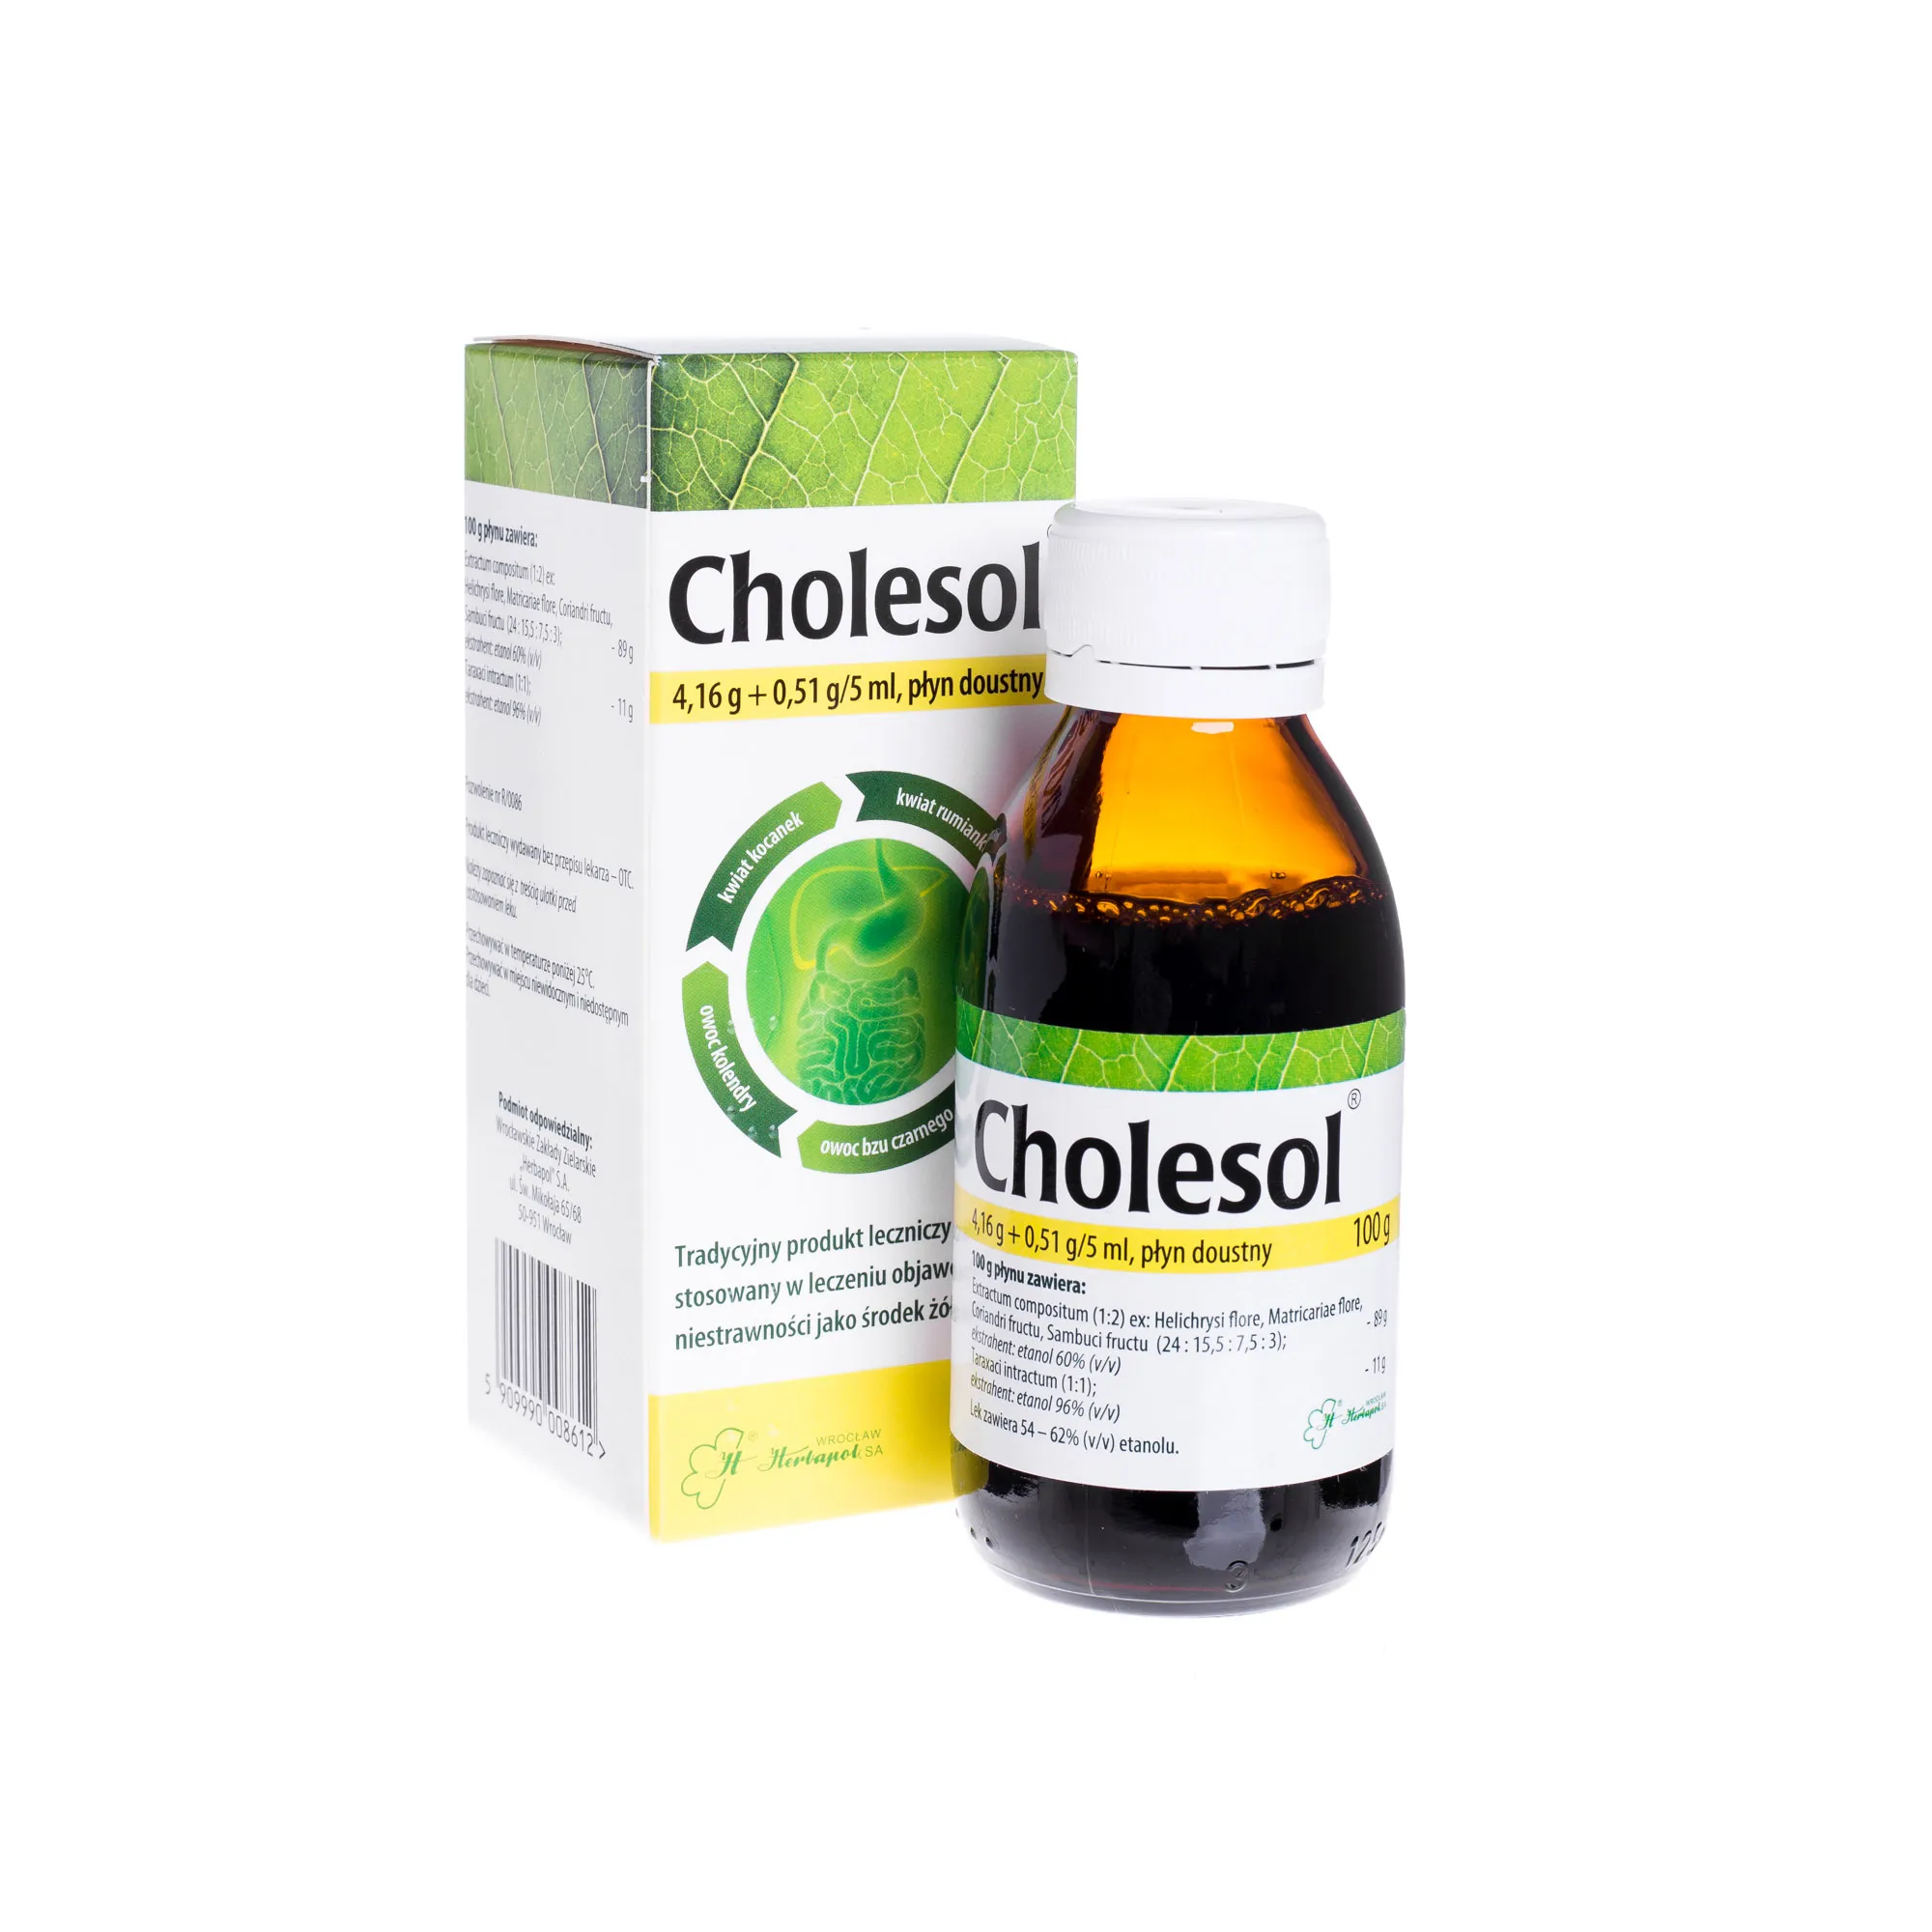 Cholesol 4,16 g+ 0,51 g/5 ml, płyn doustny, 100 g